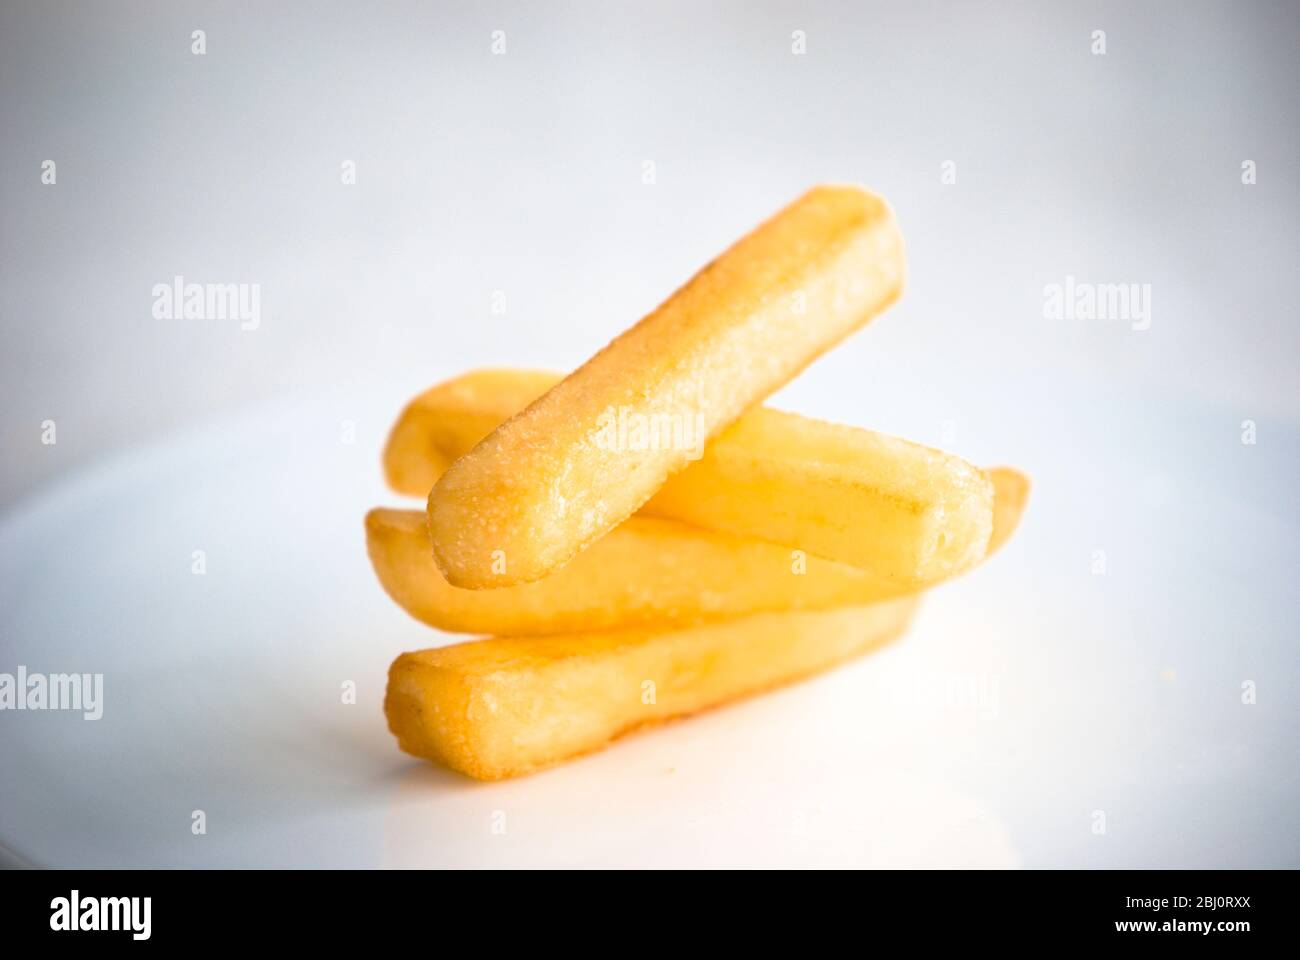 Sorgfältig ausbalancierter Stapel von vier Chips. - Stockfoto